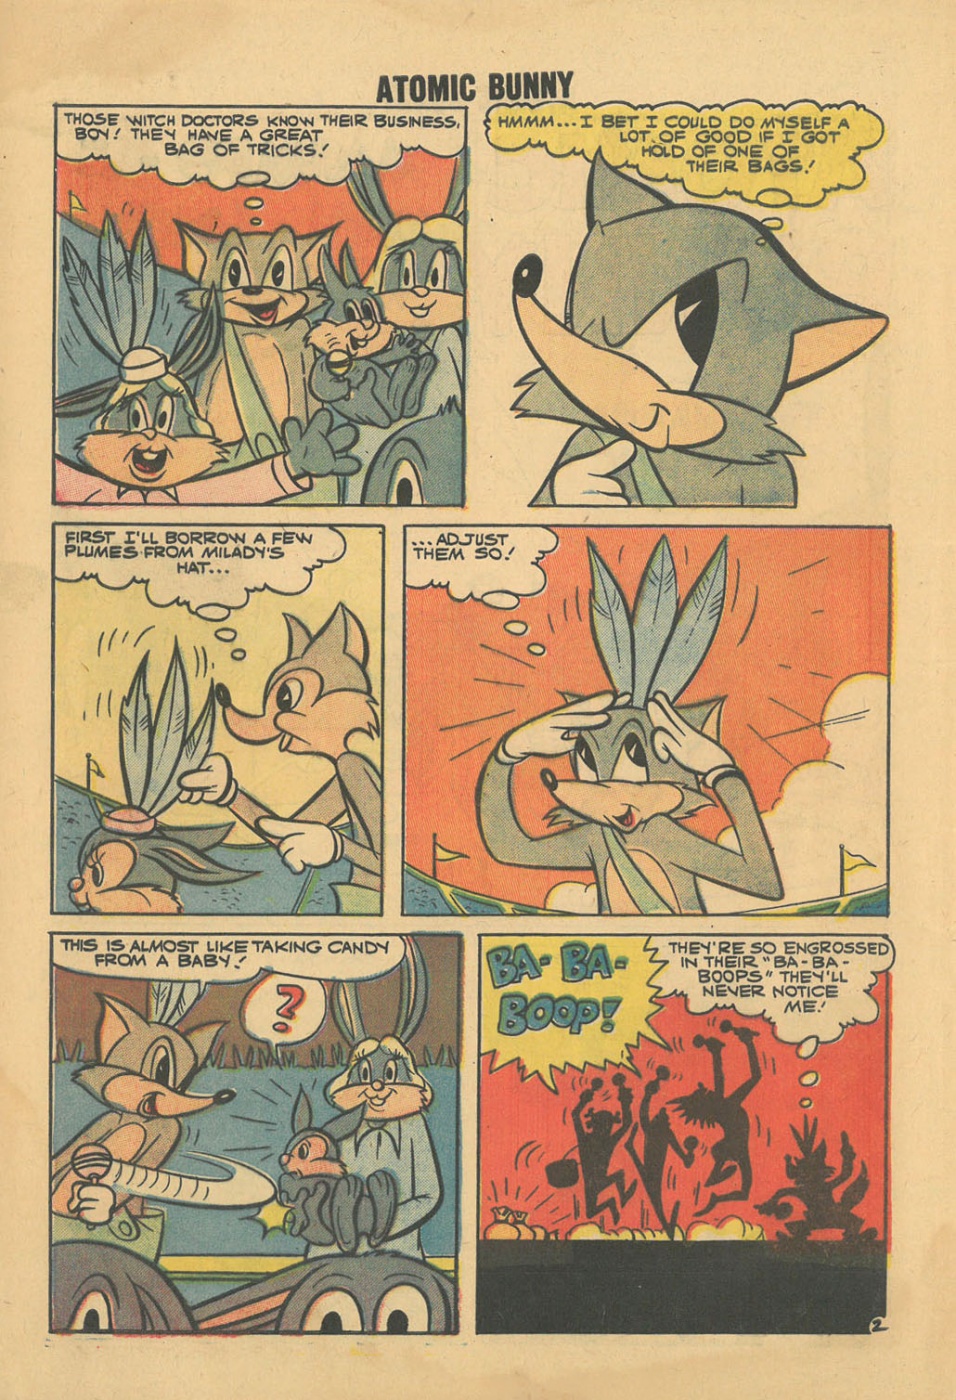 Atomic-Bunny-Comic-Strips (c) (4)